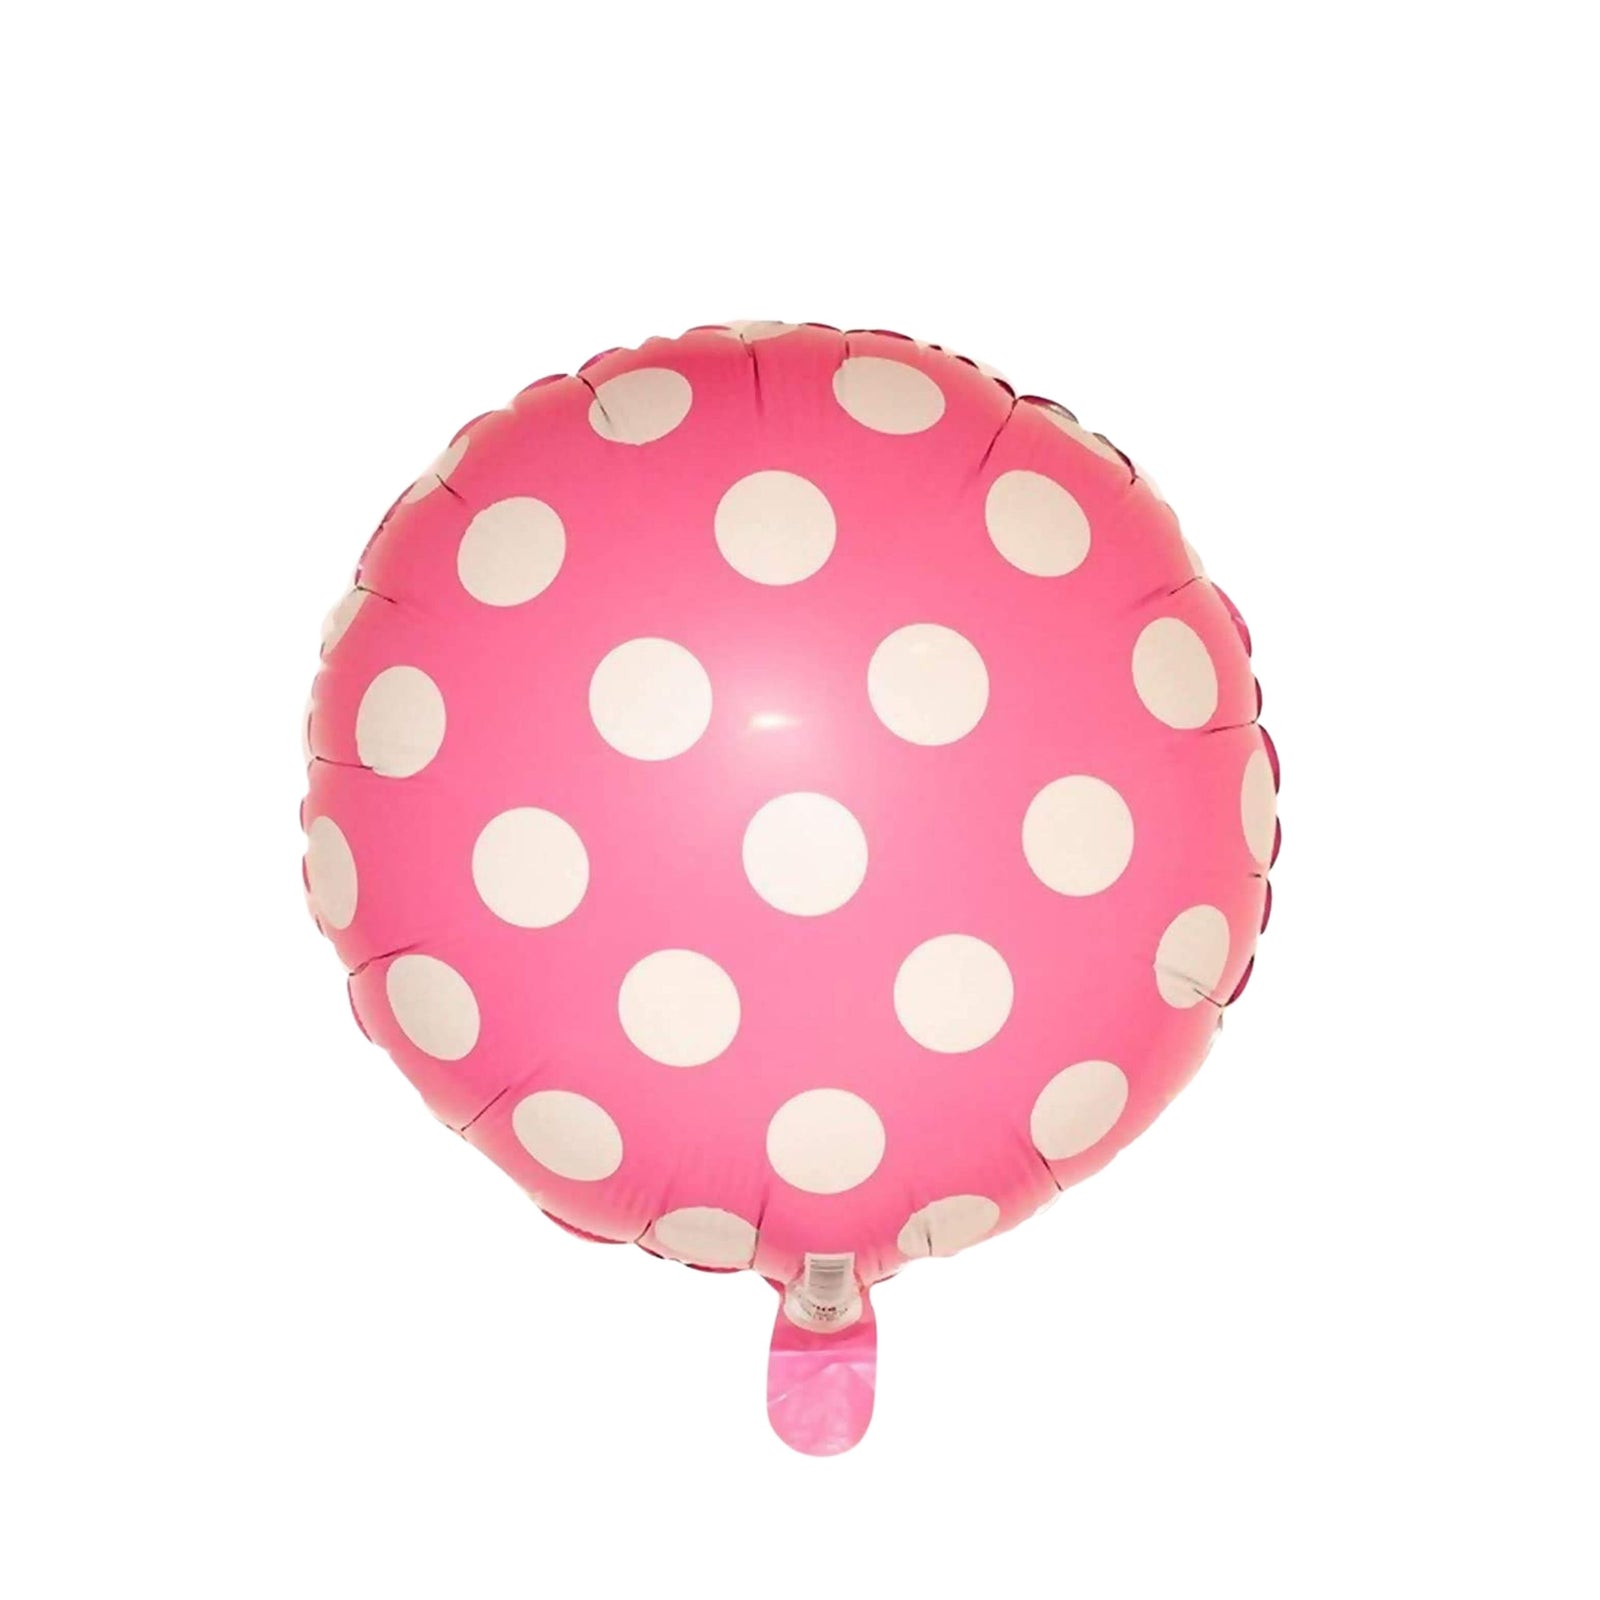 Round Shape Pink Polka Dot Foil Balloon